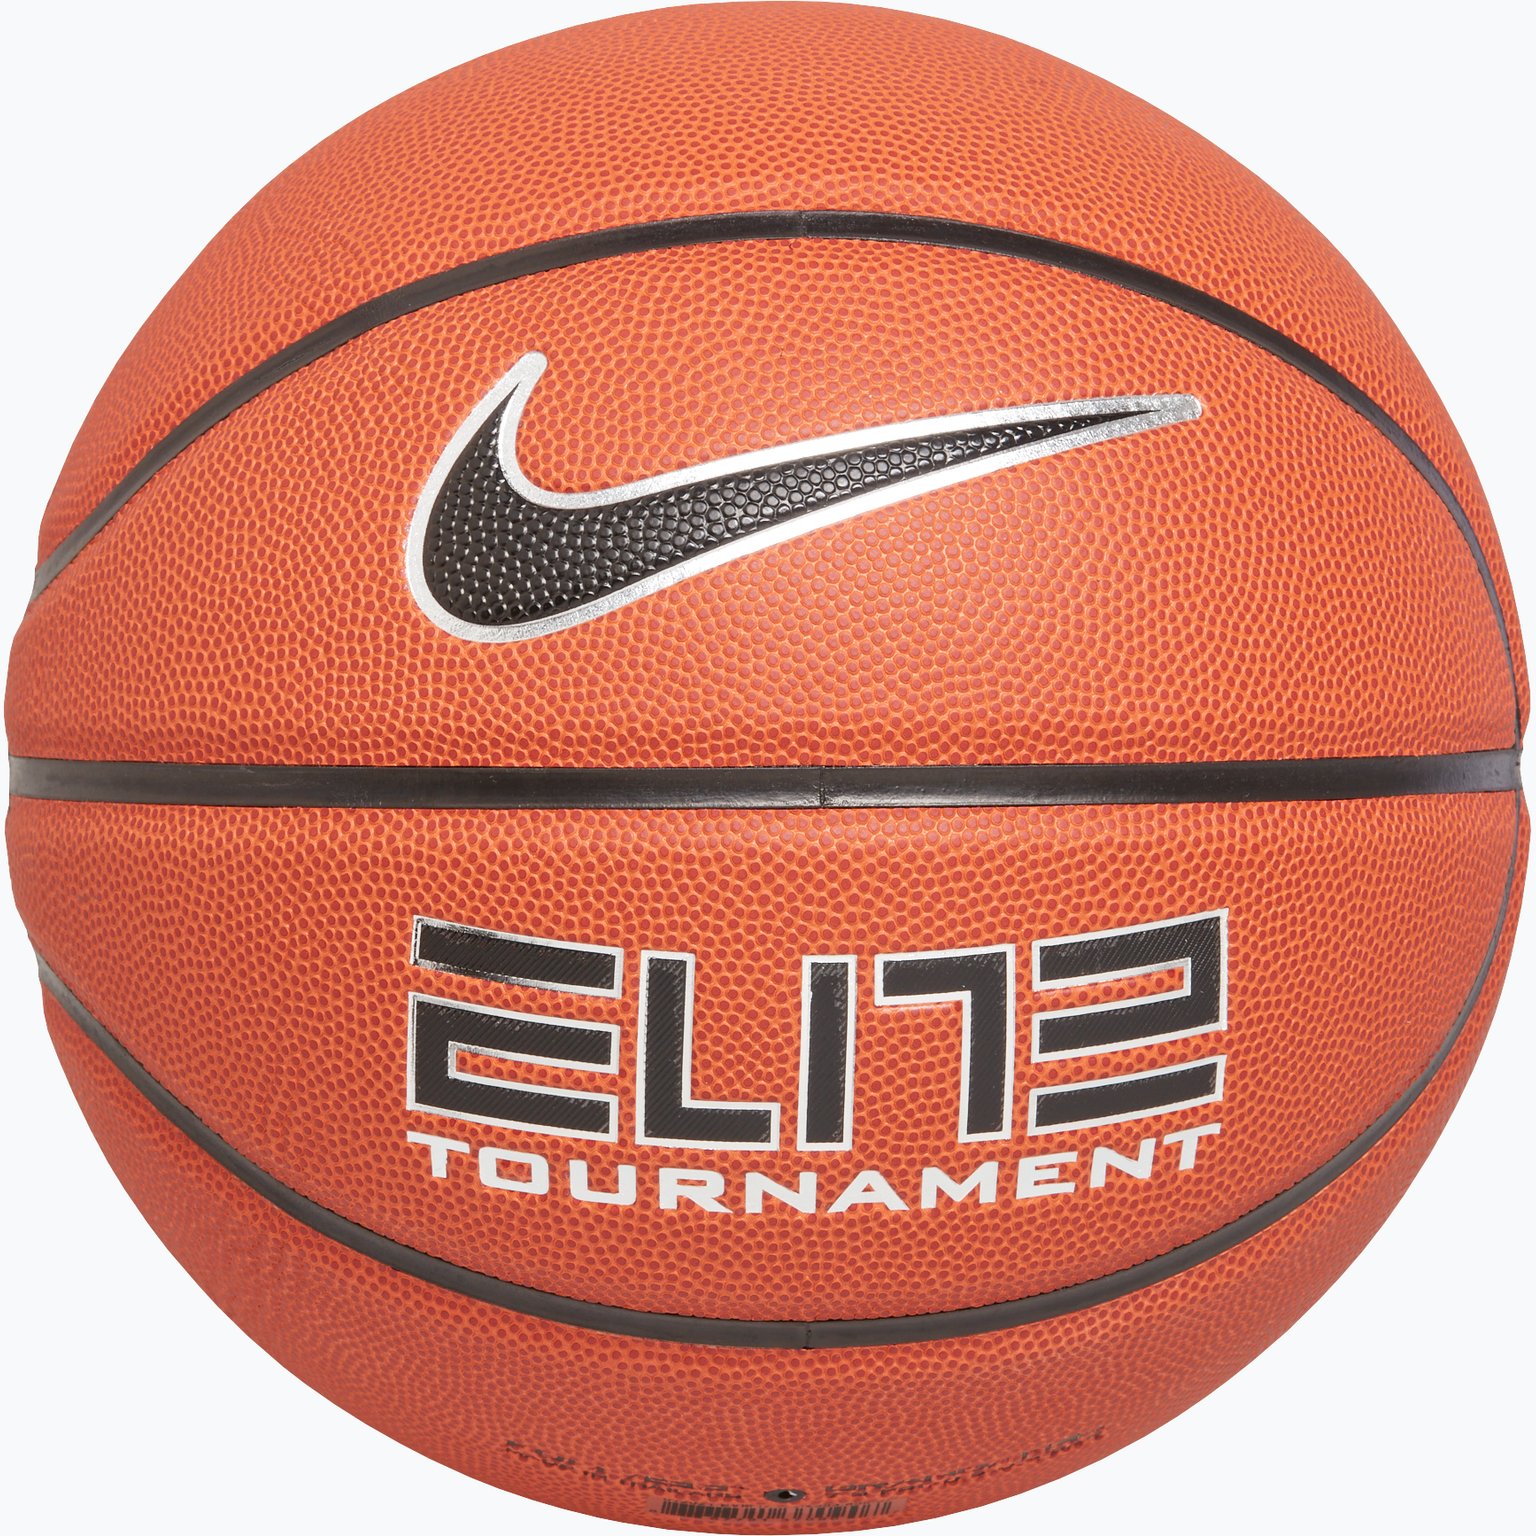 Elite Tournament 8P basketboll